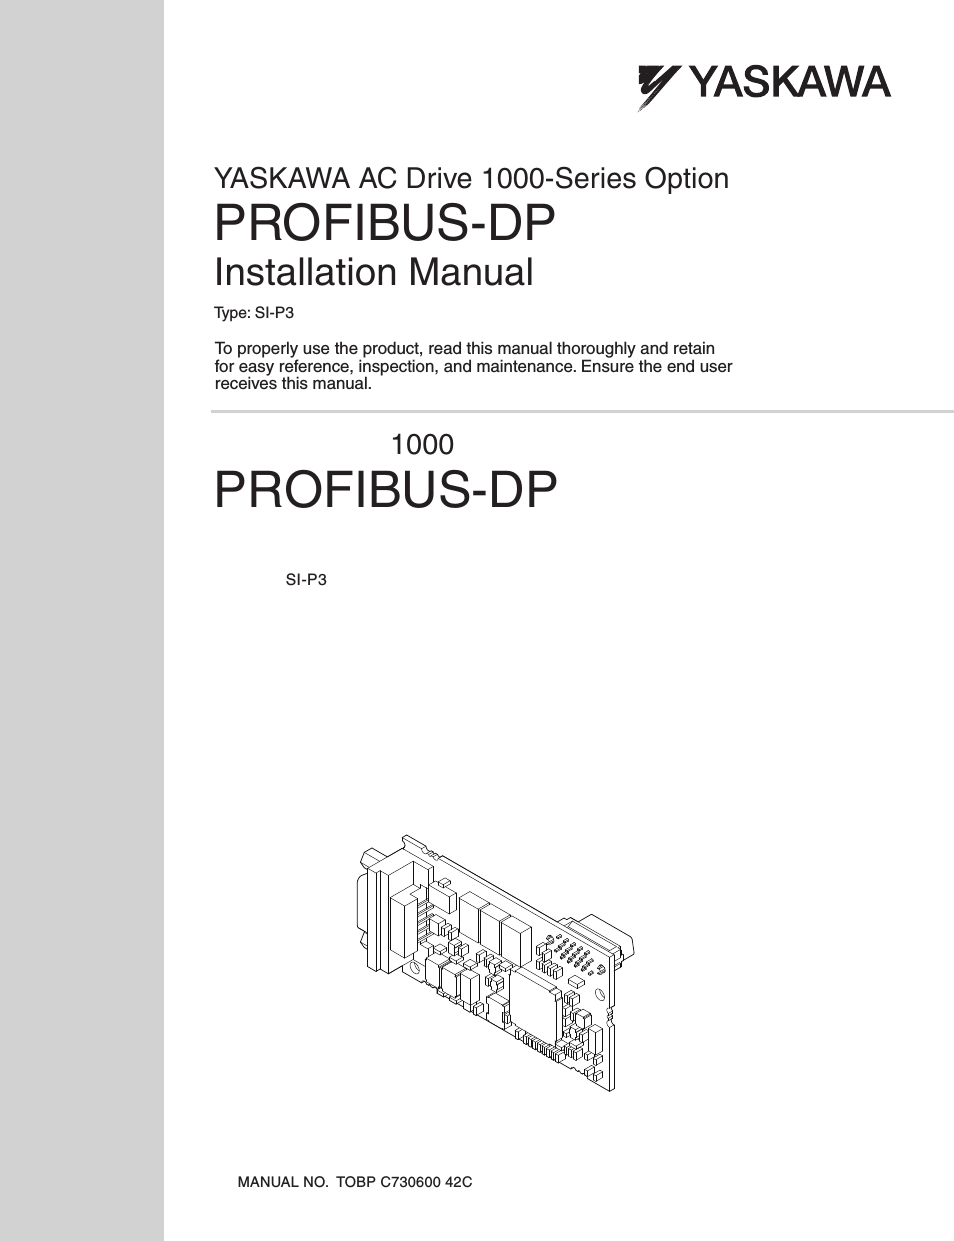 1000 Series Drive Option - Profibus-DP